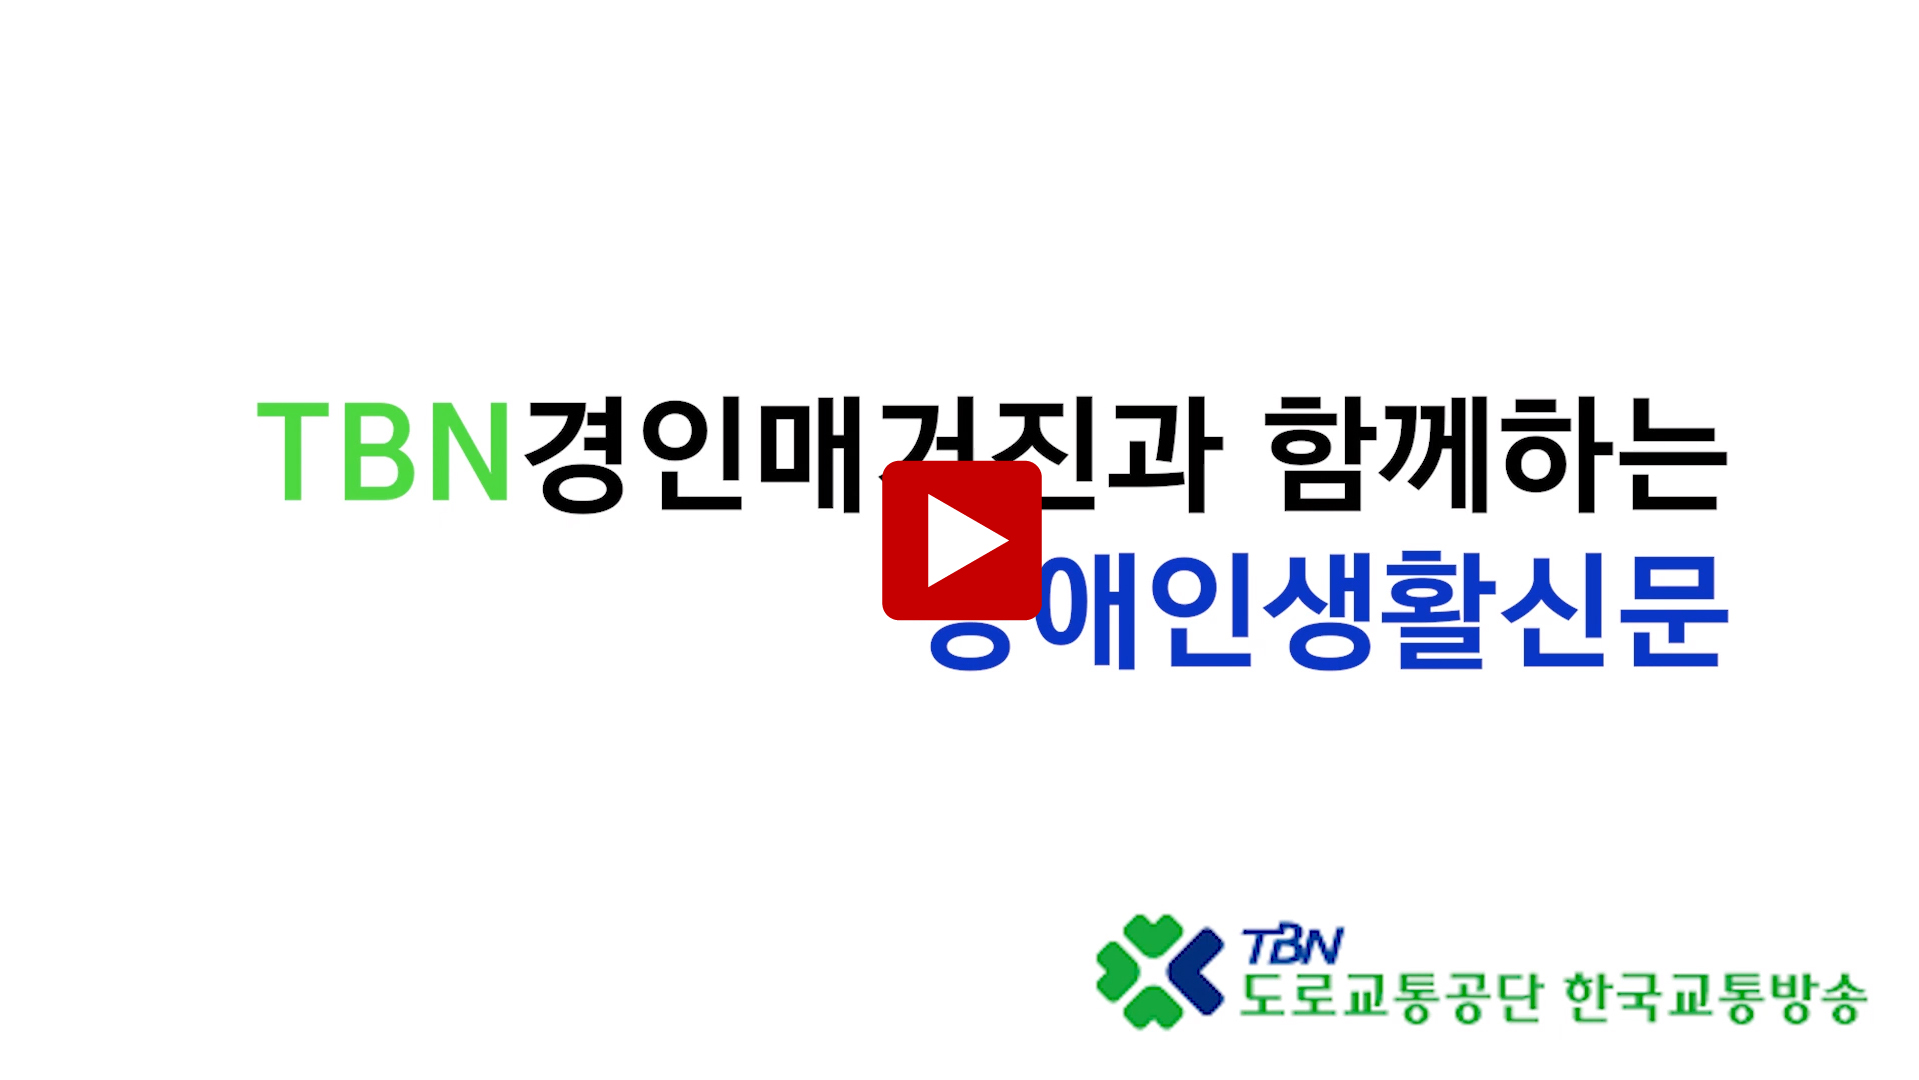 TBN경인매거진과 함께하는 장애인생활신문 -2022년 2월 16일 방송